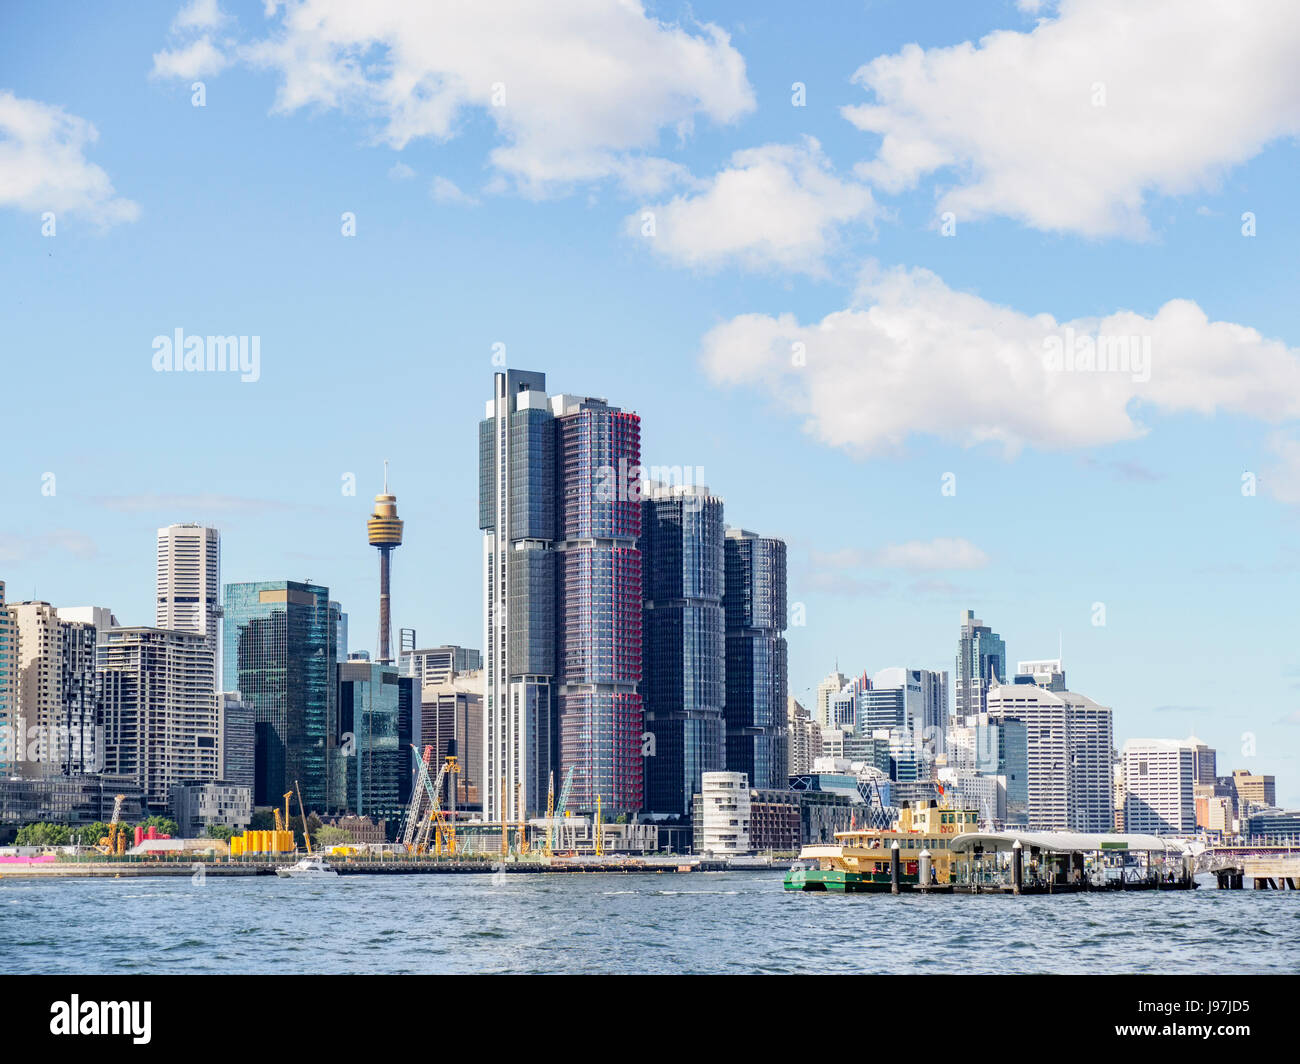 Australia, New South Wales, Sydney, City skyline with skyscrapers Stock Photo